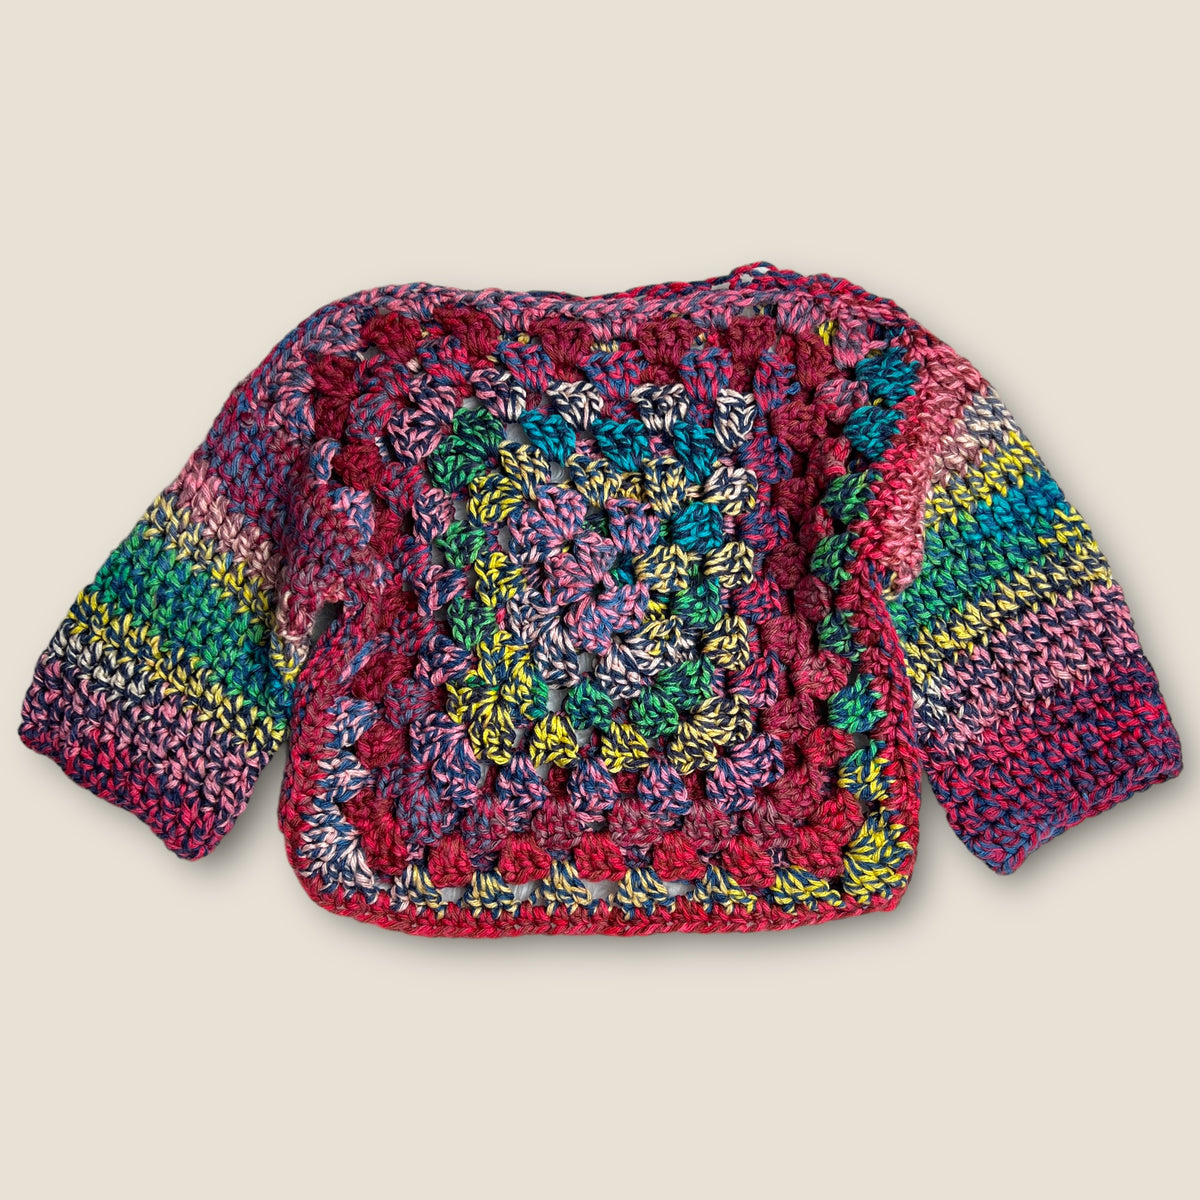 Handmade Crochet Top size 3-4 years